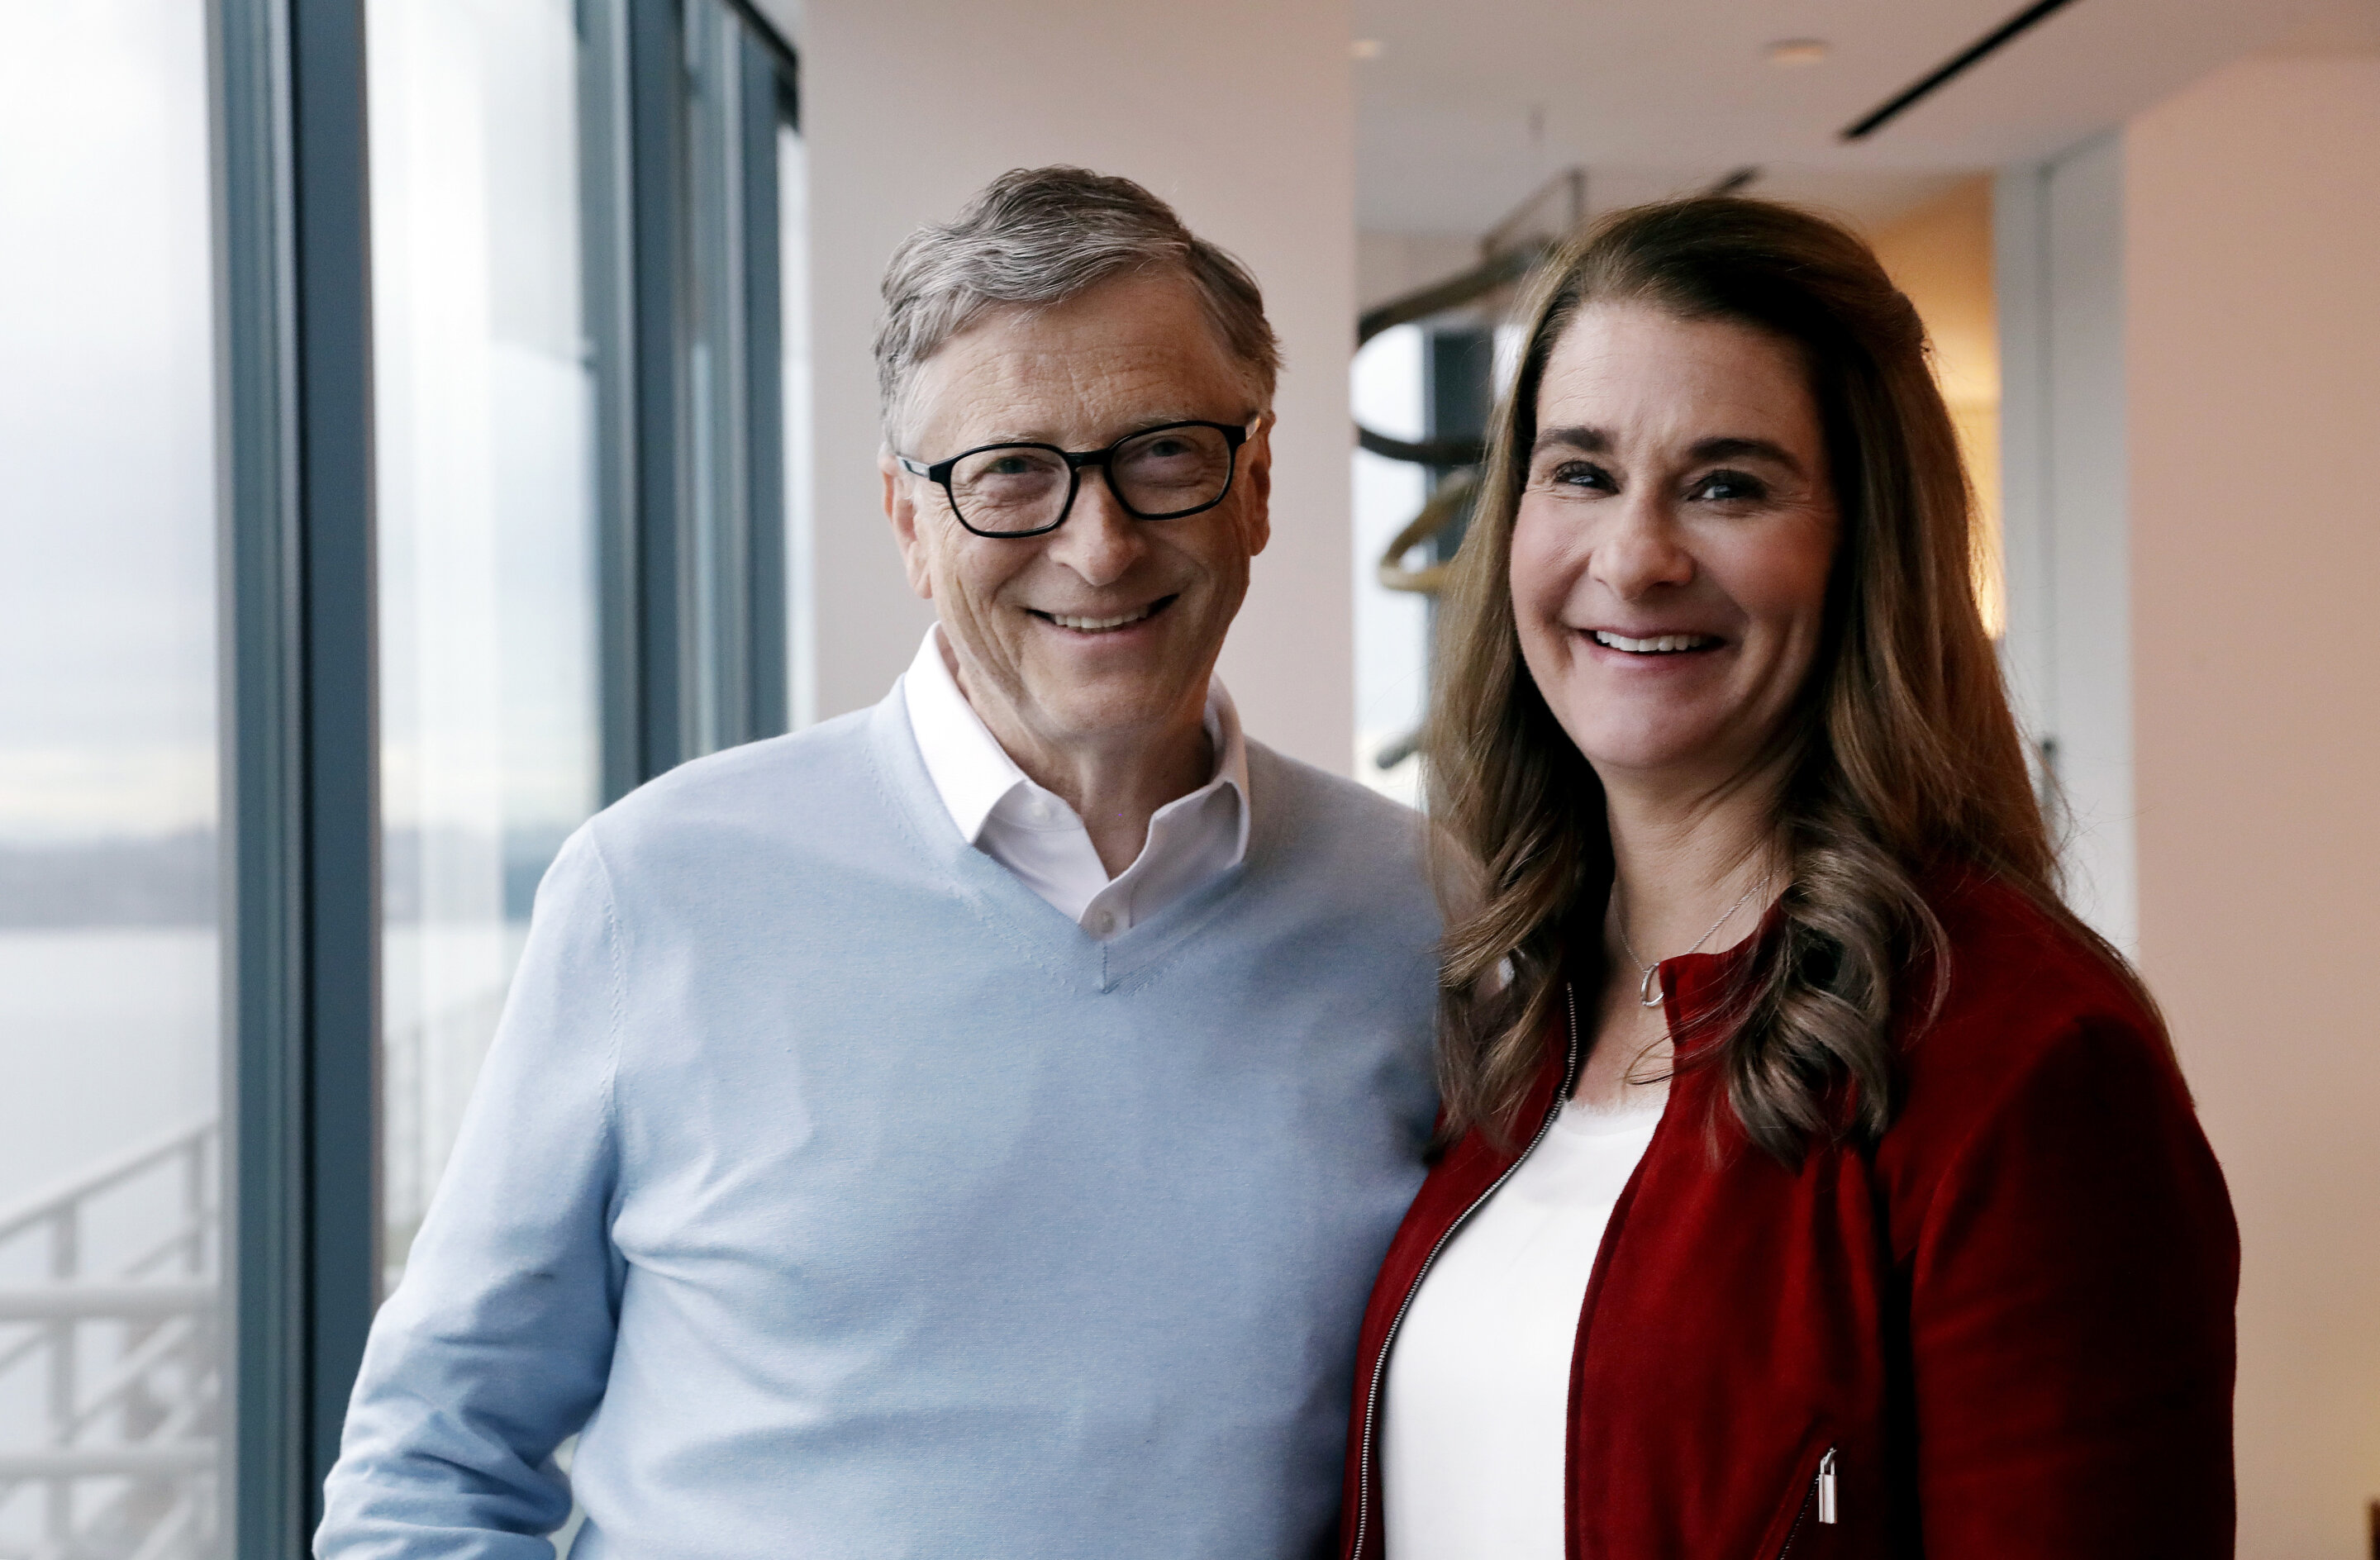 #Gates Foundation donates $1B to prioritize math education